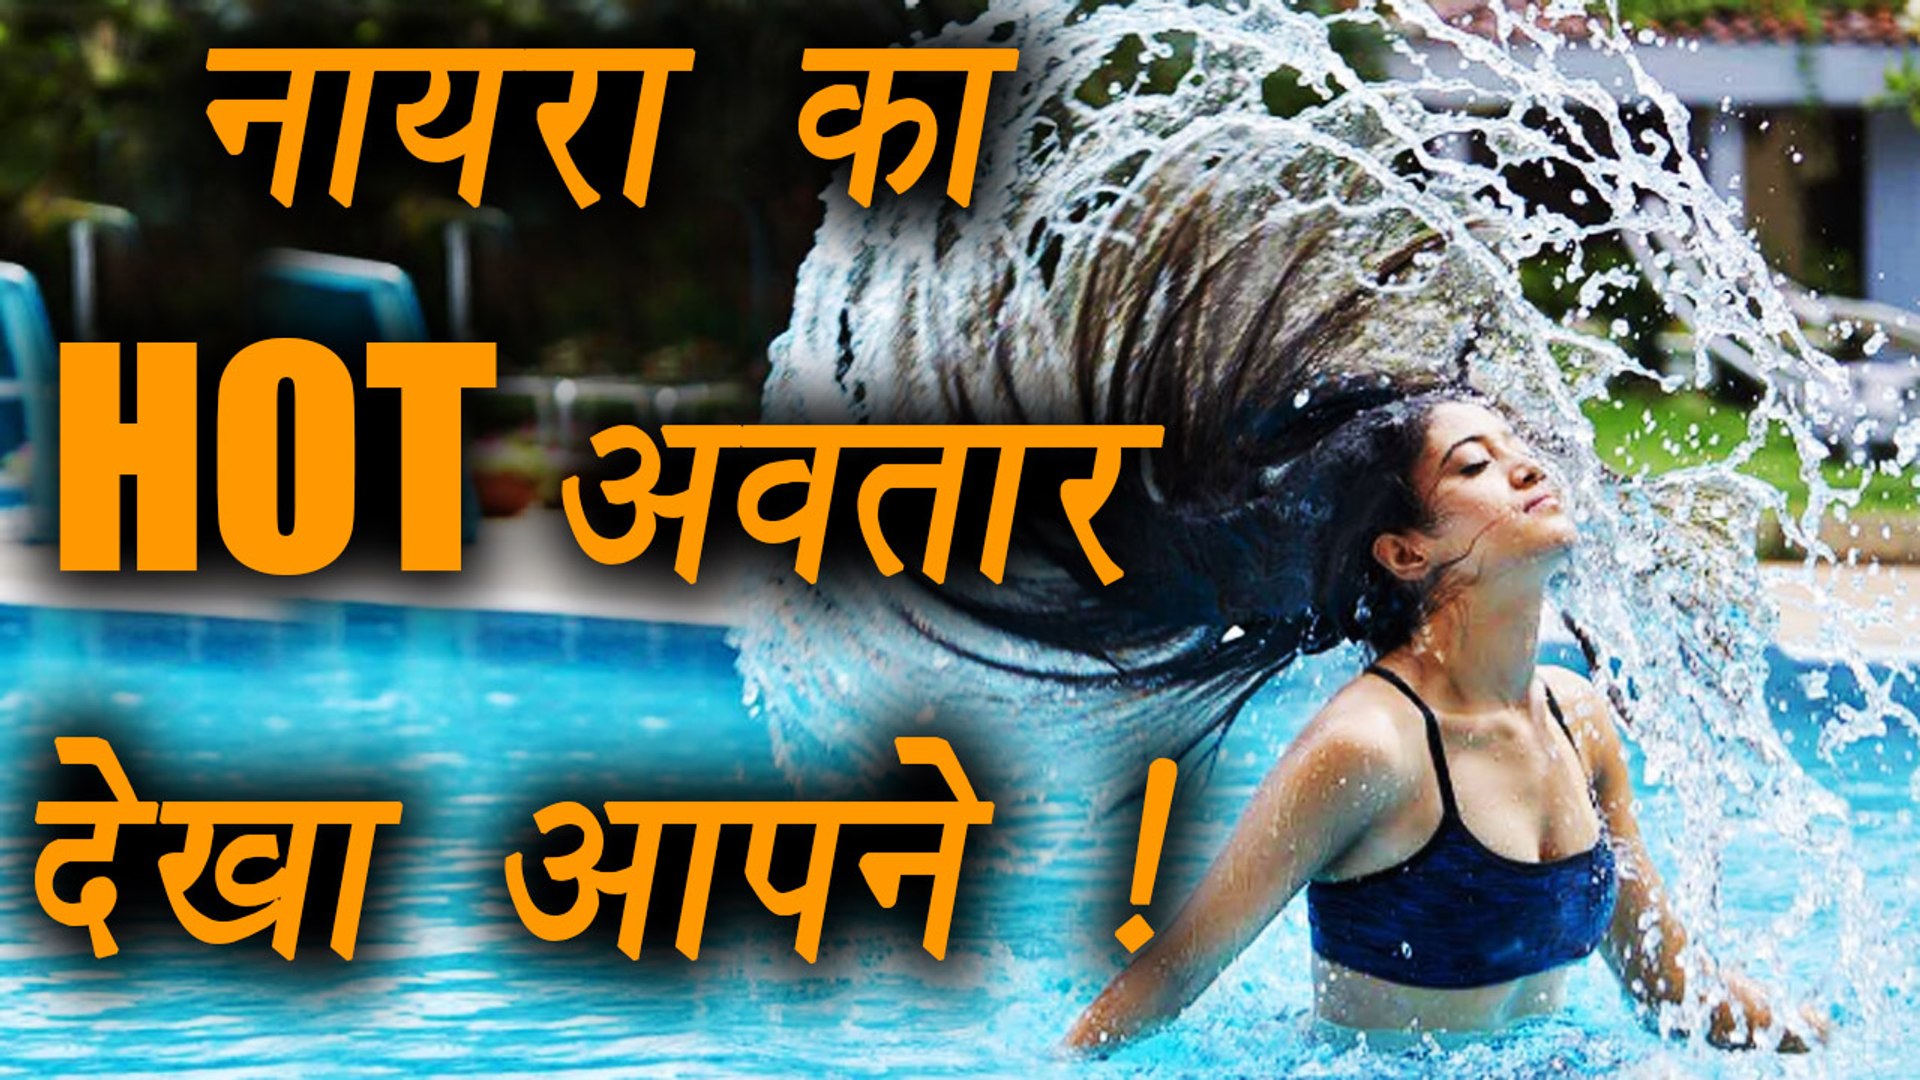 Shivangi Sex - Shivangi Joshi aka Naira's HOT pool WORKOUT photo goes VIRAL | FilmiBeat -  video Dailymotion